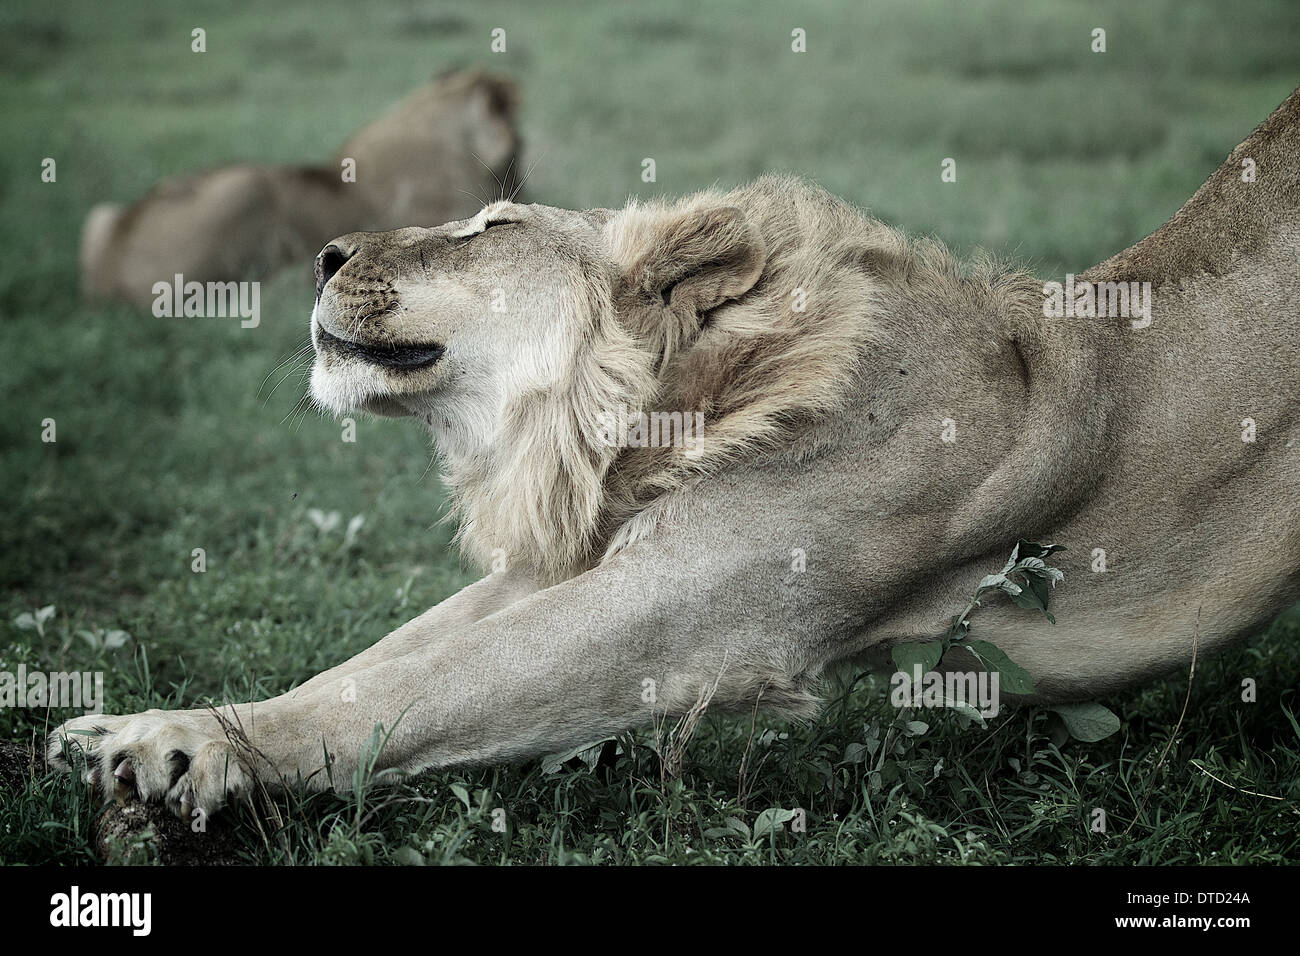 Lion stretches. Serengeti National Park. Tanzania. Africa Panthera leo Stock Photo